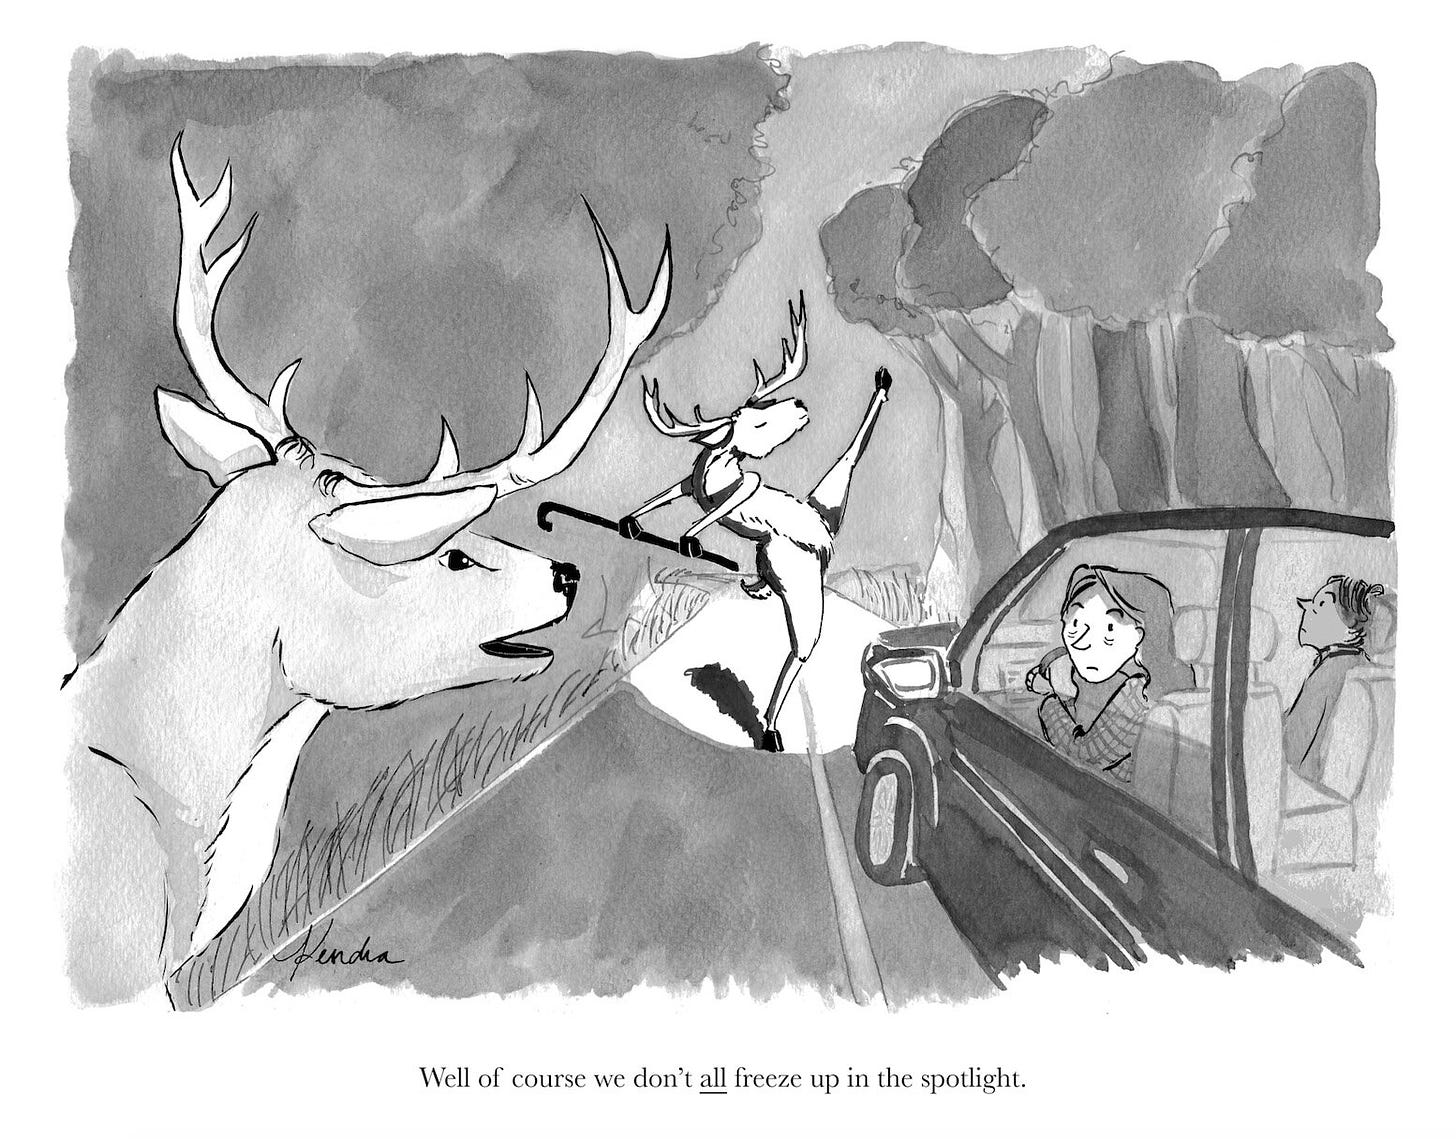 New Yorker Cartoon deer dancing in car headlights.jpeg